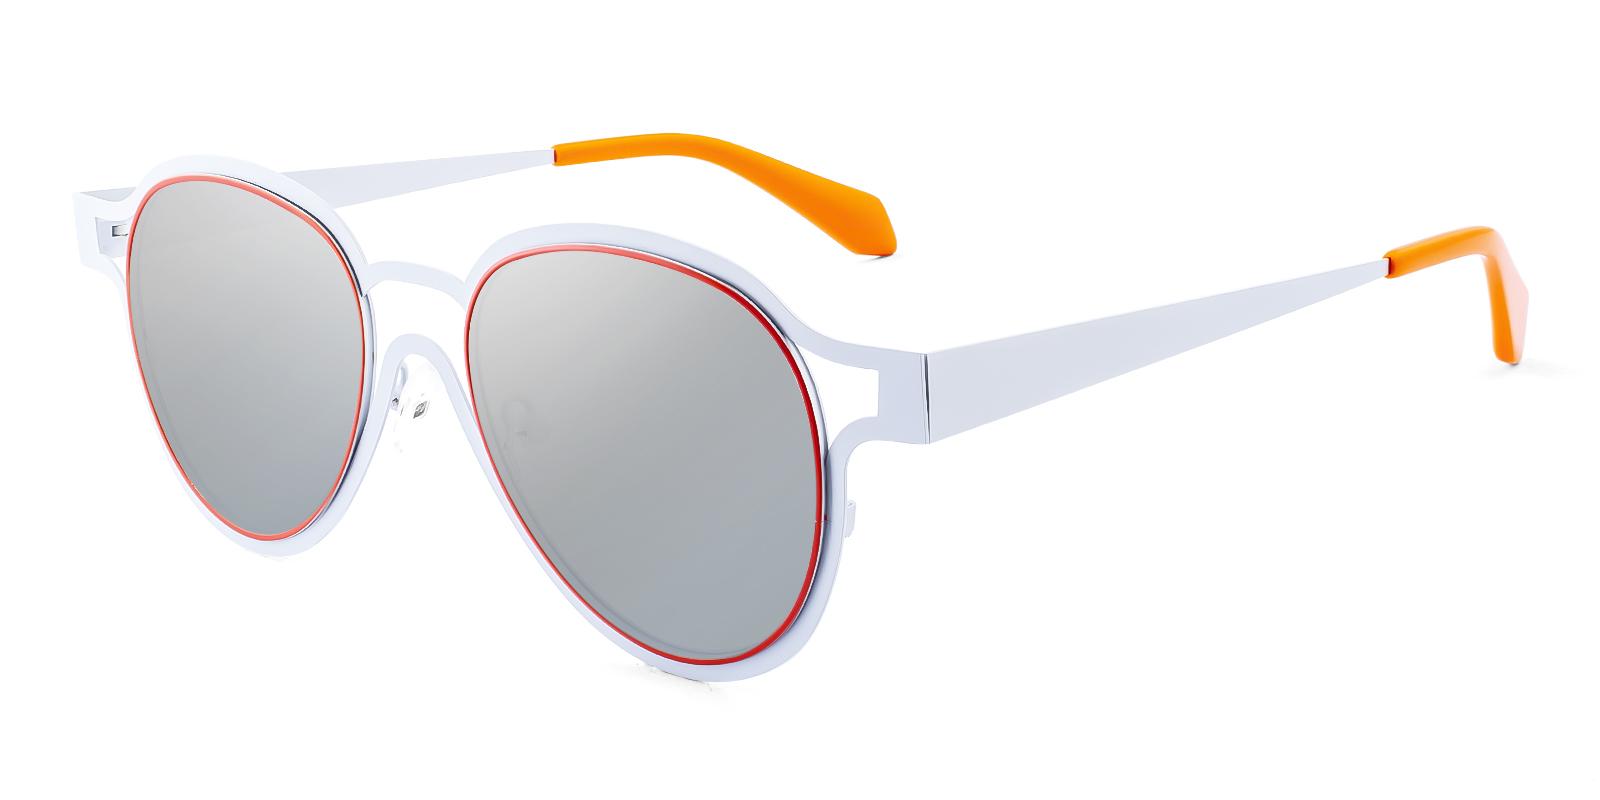 Phano White Metal Sunglasses , NosePads Frames from ABBE Glasses